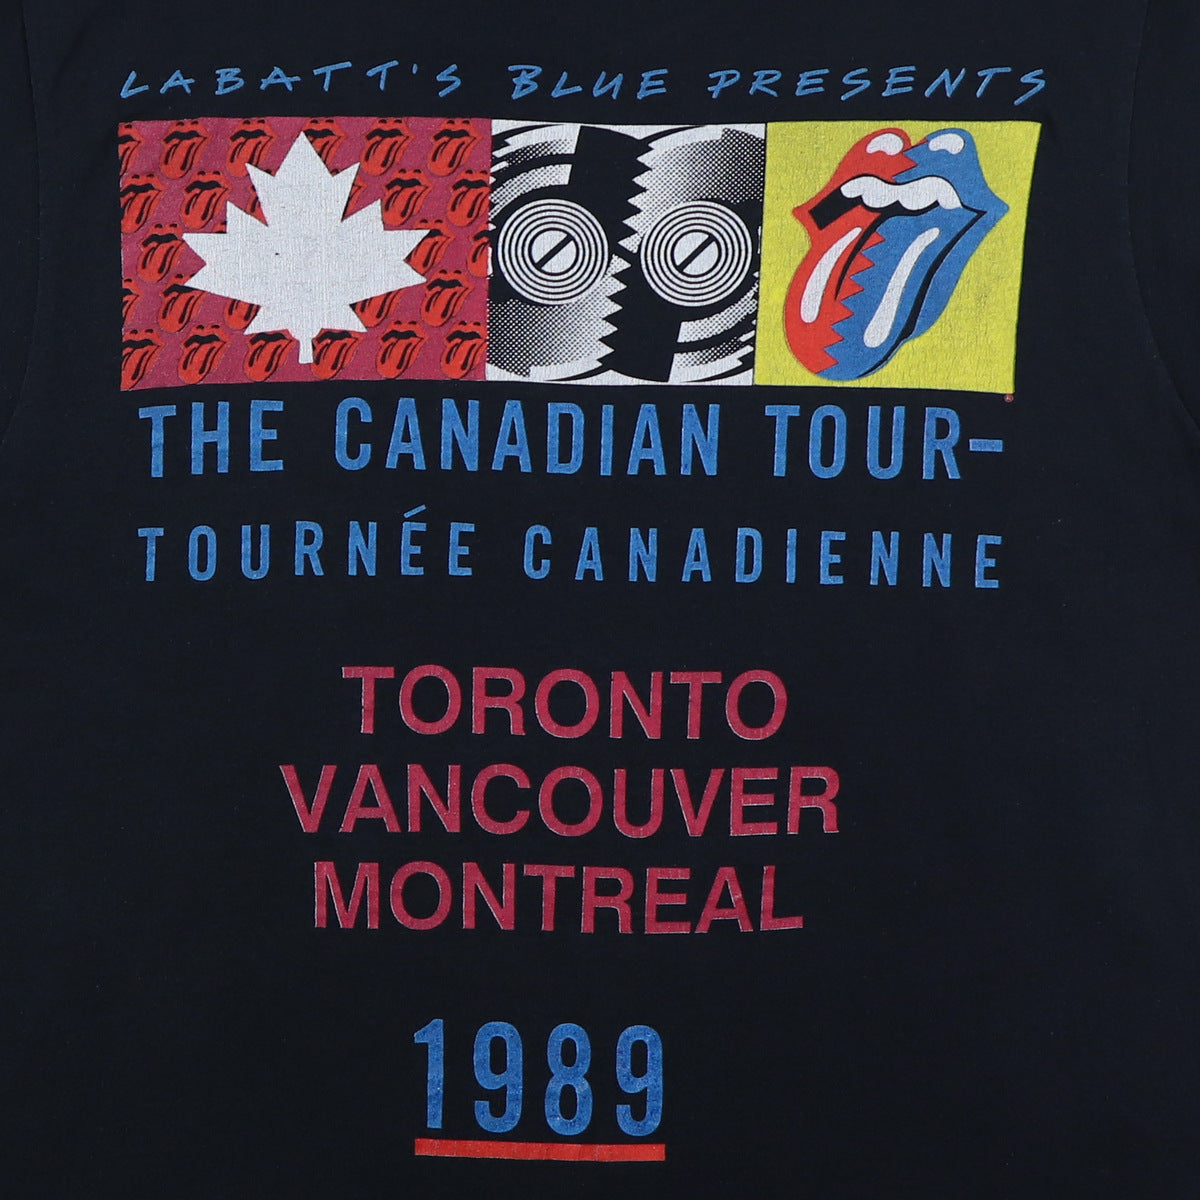 1989 Rolling Stones Steel Wheels Tour Shirt